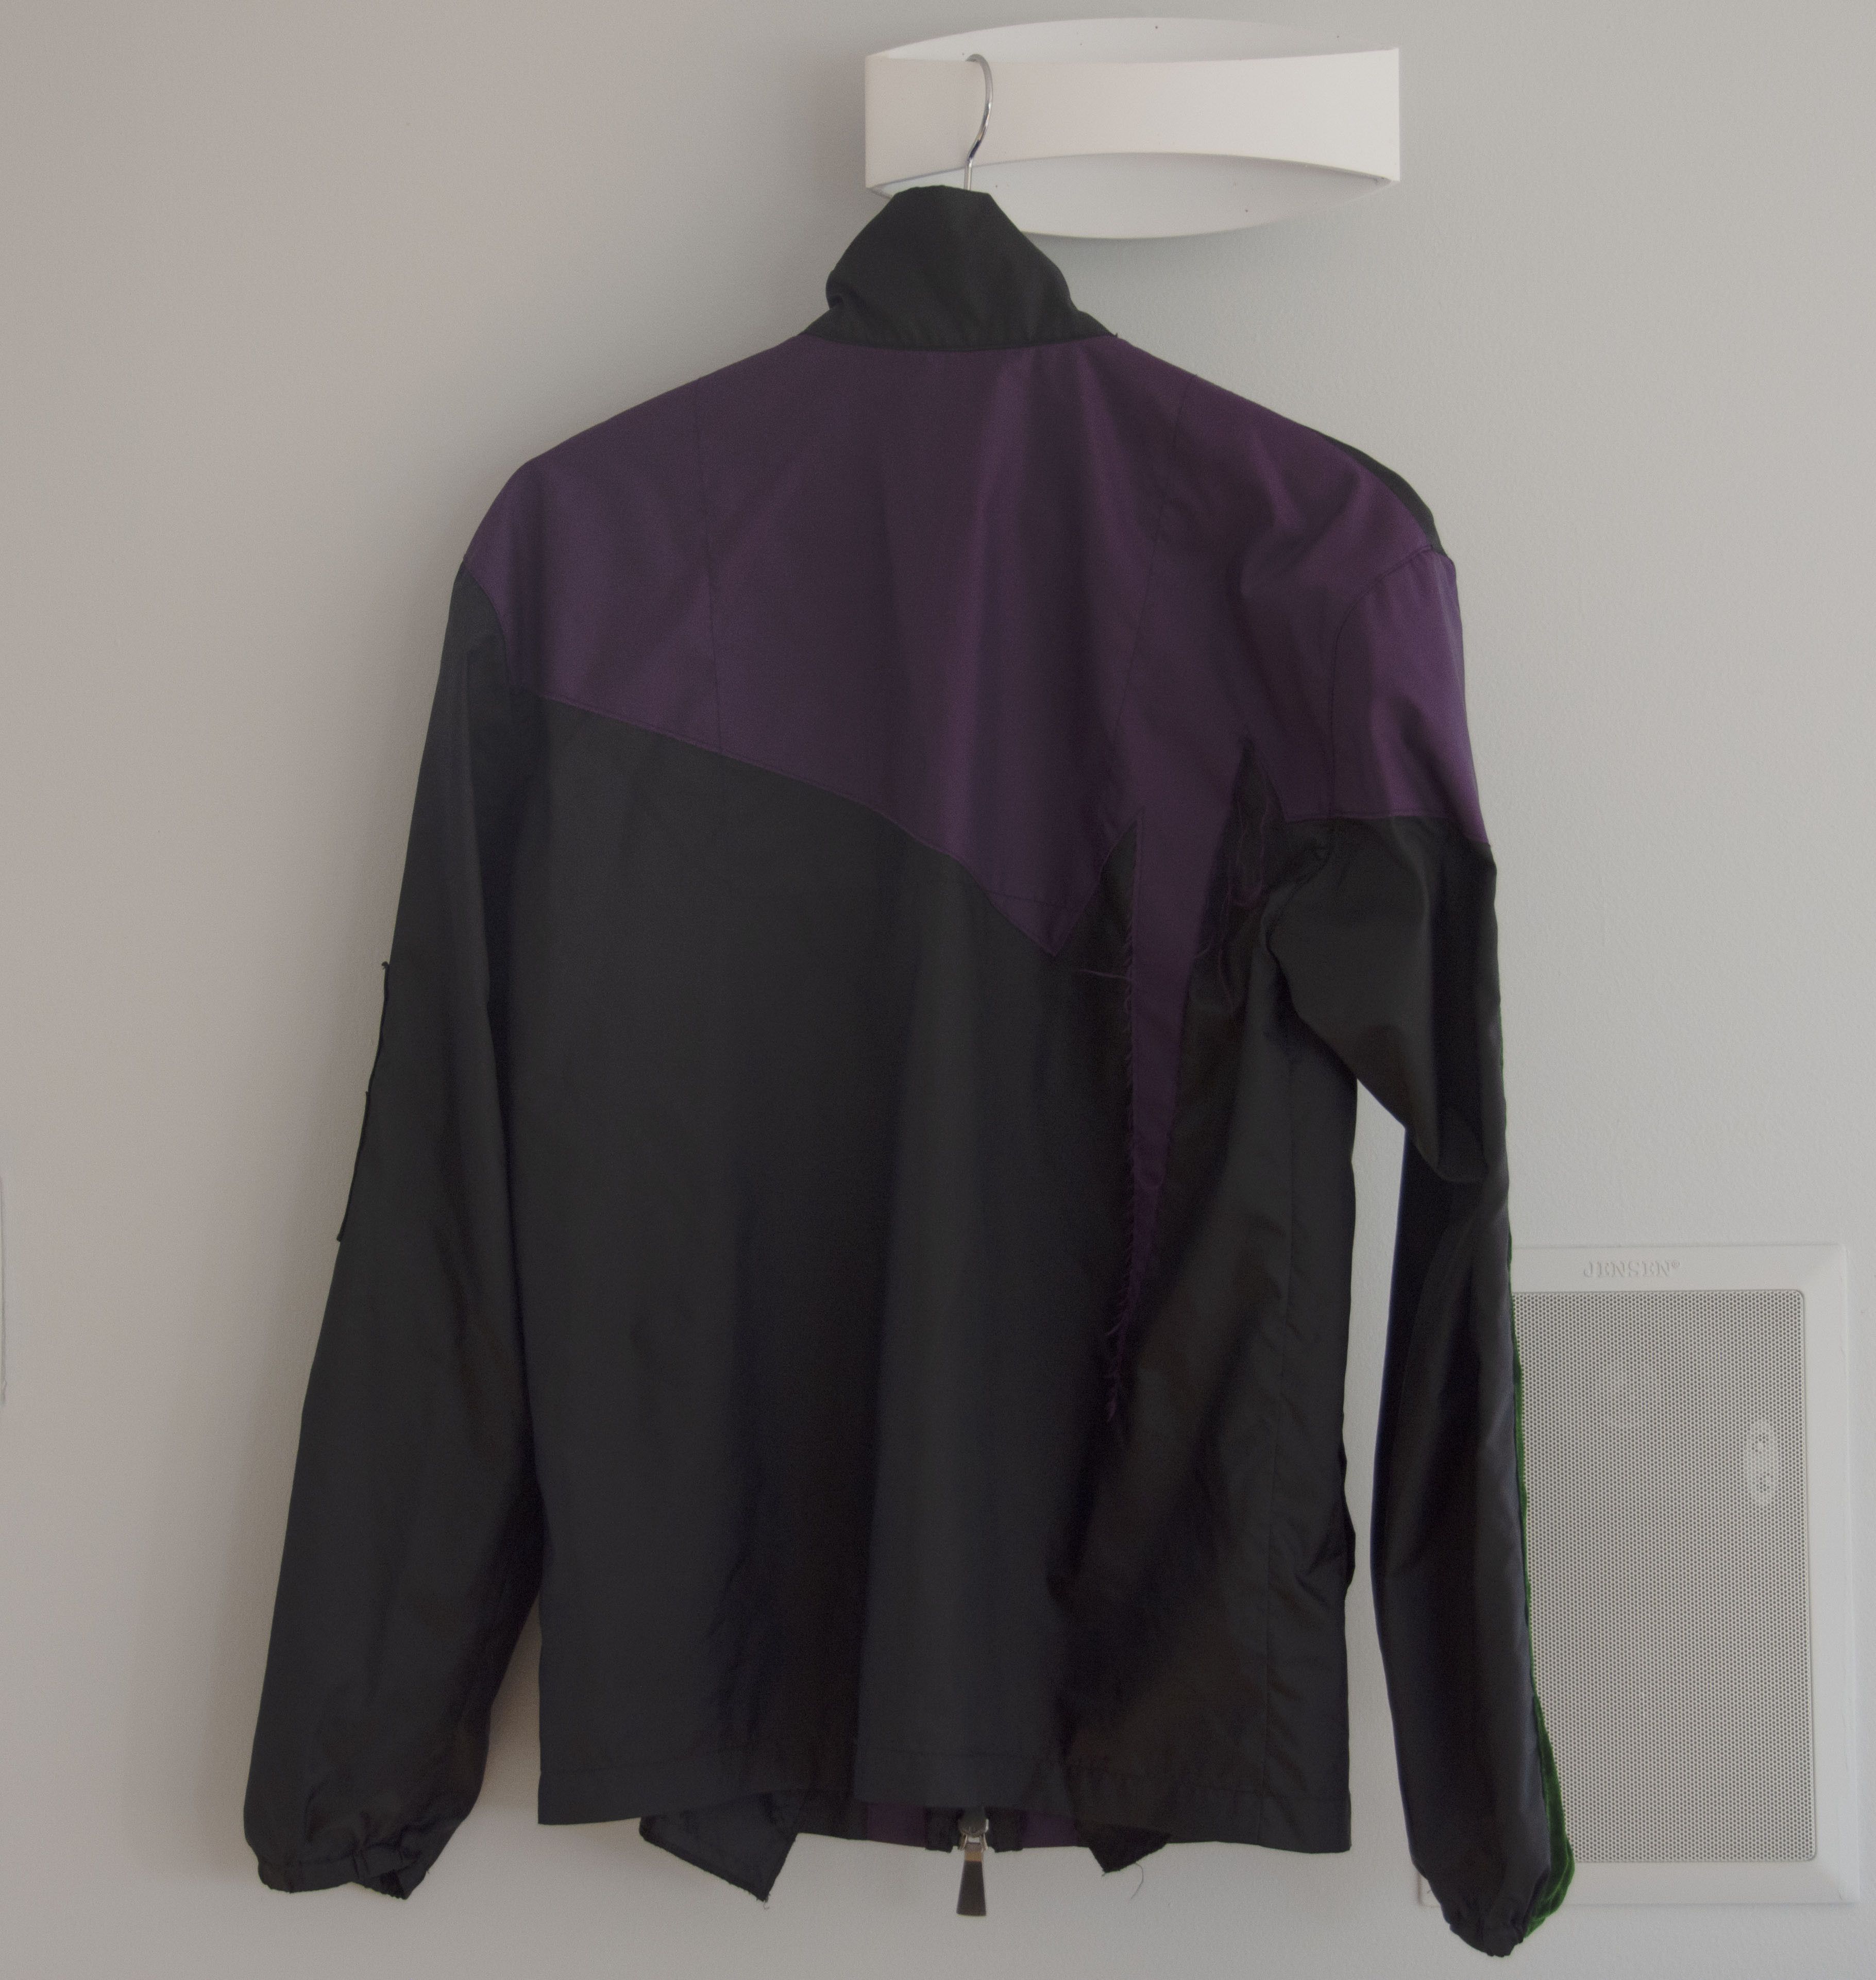 Pyer Moss Pyer Moss Black and Purple Track Jacket/ Tracksuit Jacket Size US XS / EU 42 / 0 - 3 Thumbnail